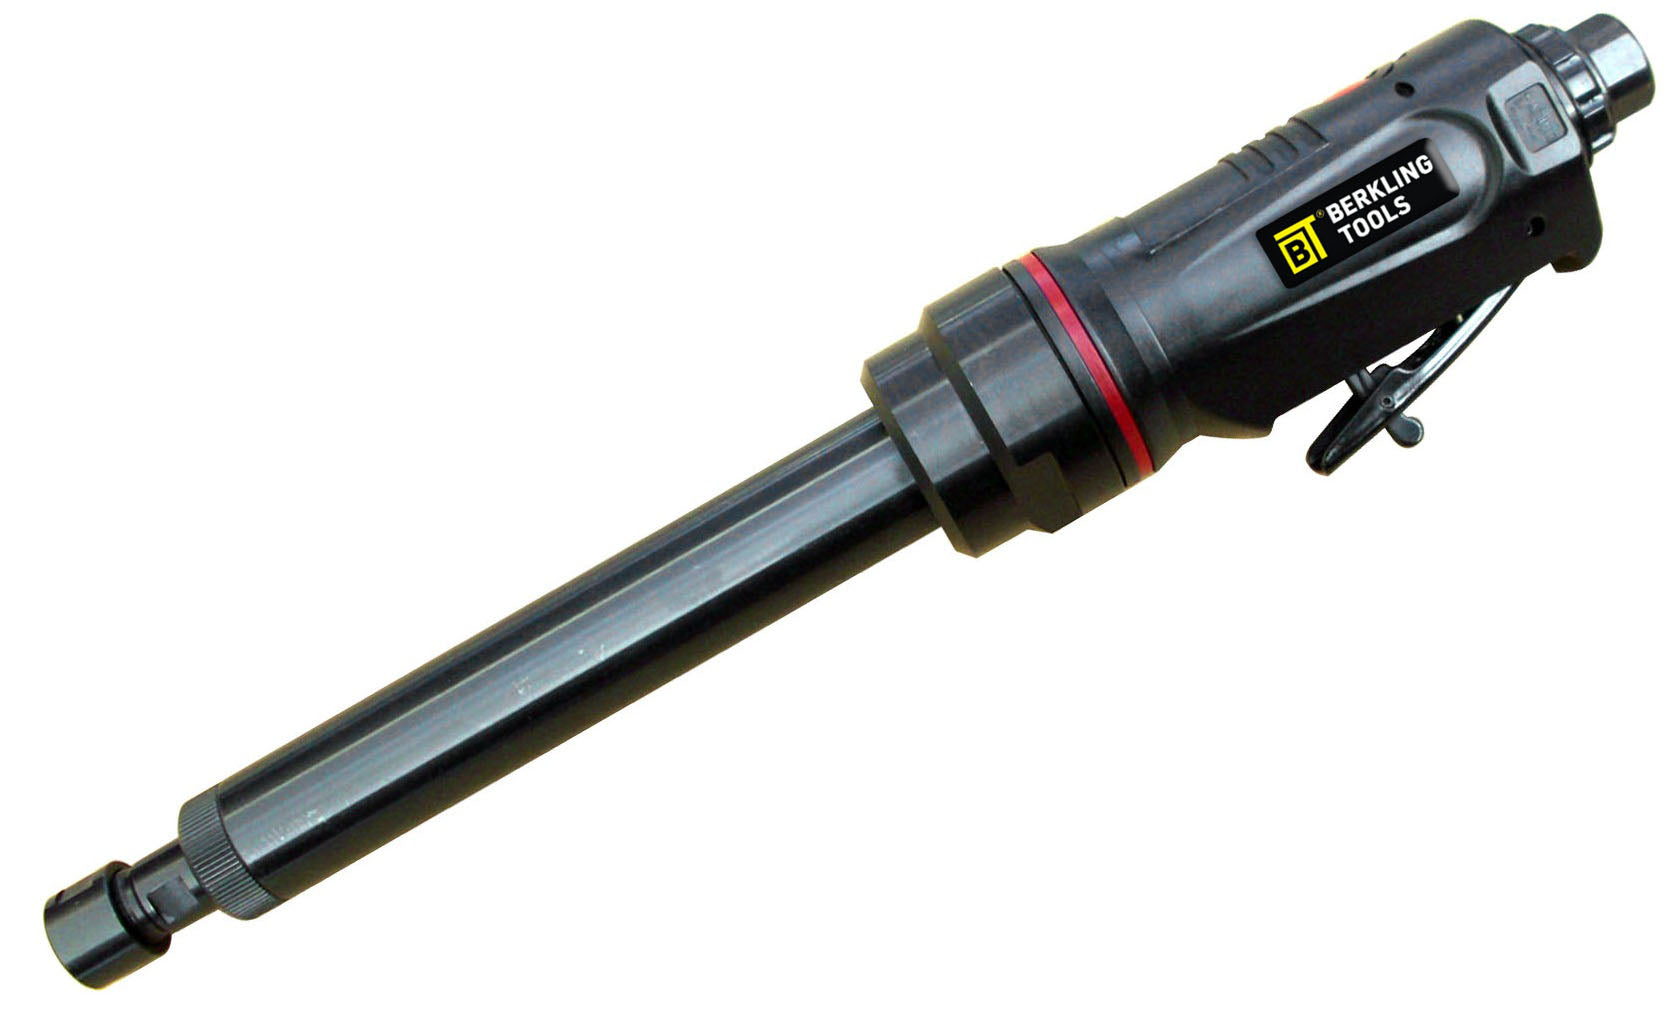 Berkling BT 6321-12 1/4“ pneumatic air powered professional grade straight die grinder with 12" extended shaft